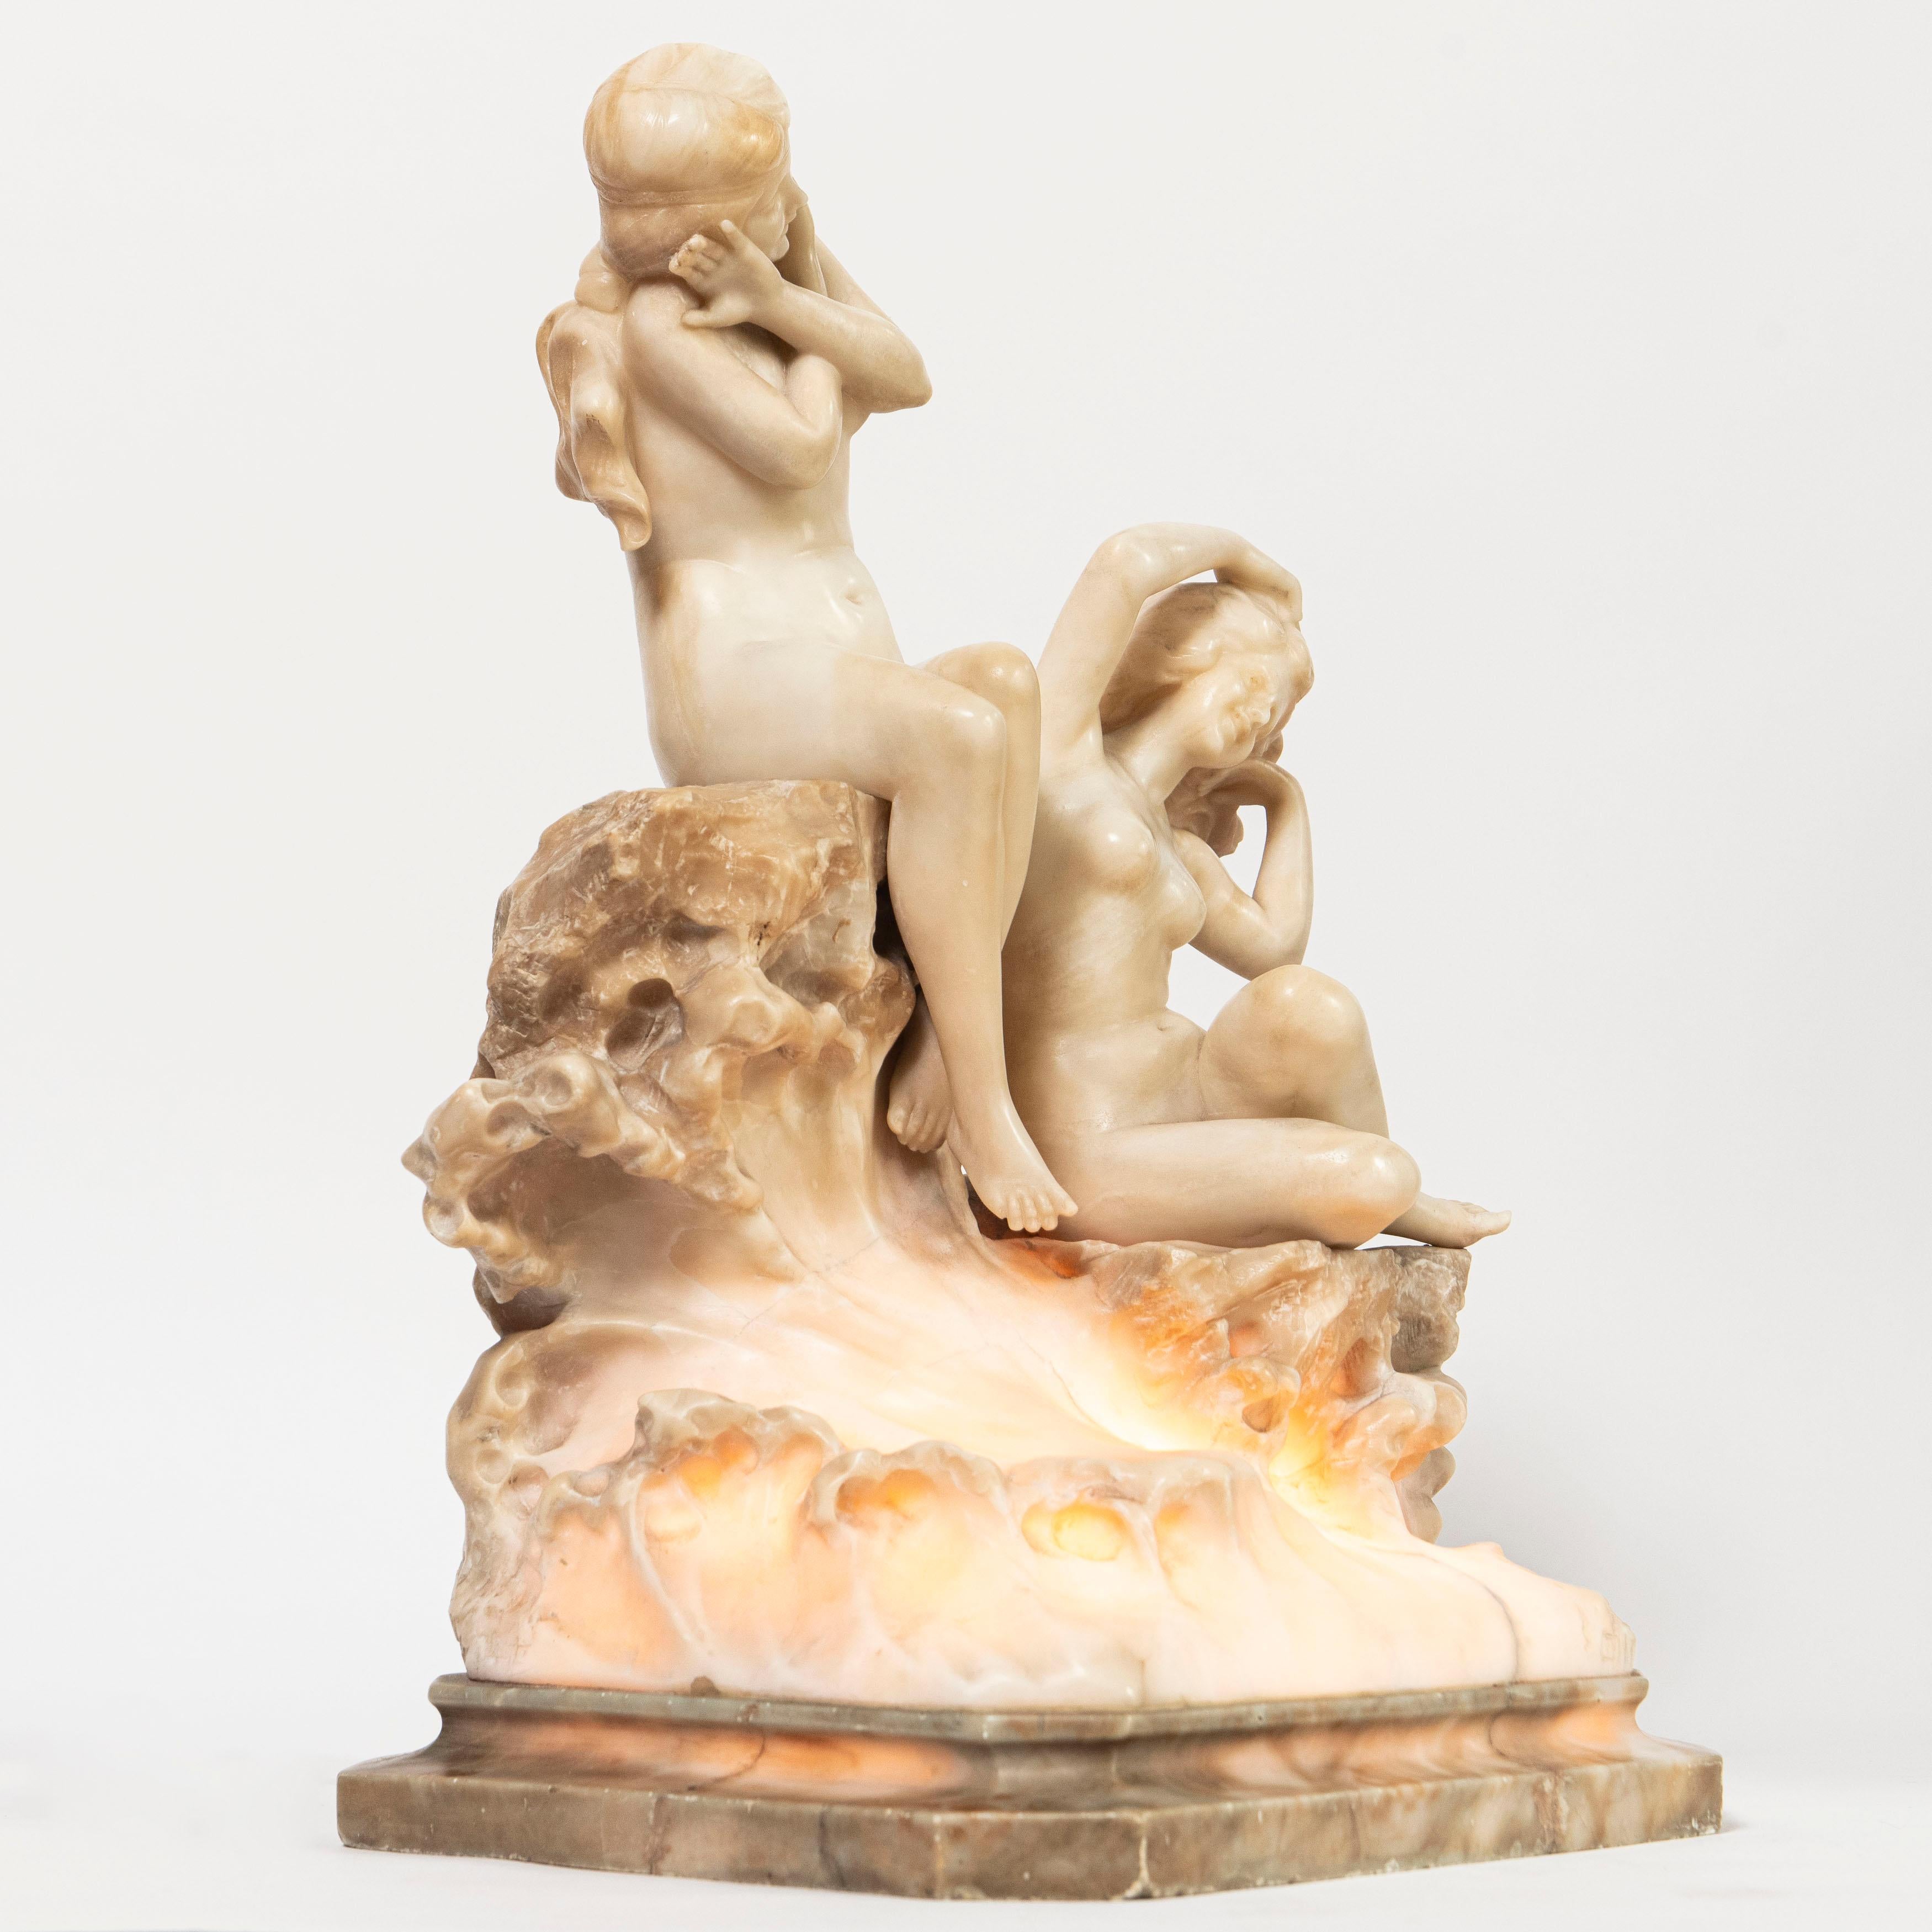 Alabaster table lamp sculpture attributed to Bastiani. Italy, late 19th century
Attributed to Ildebrando Bastiani.